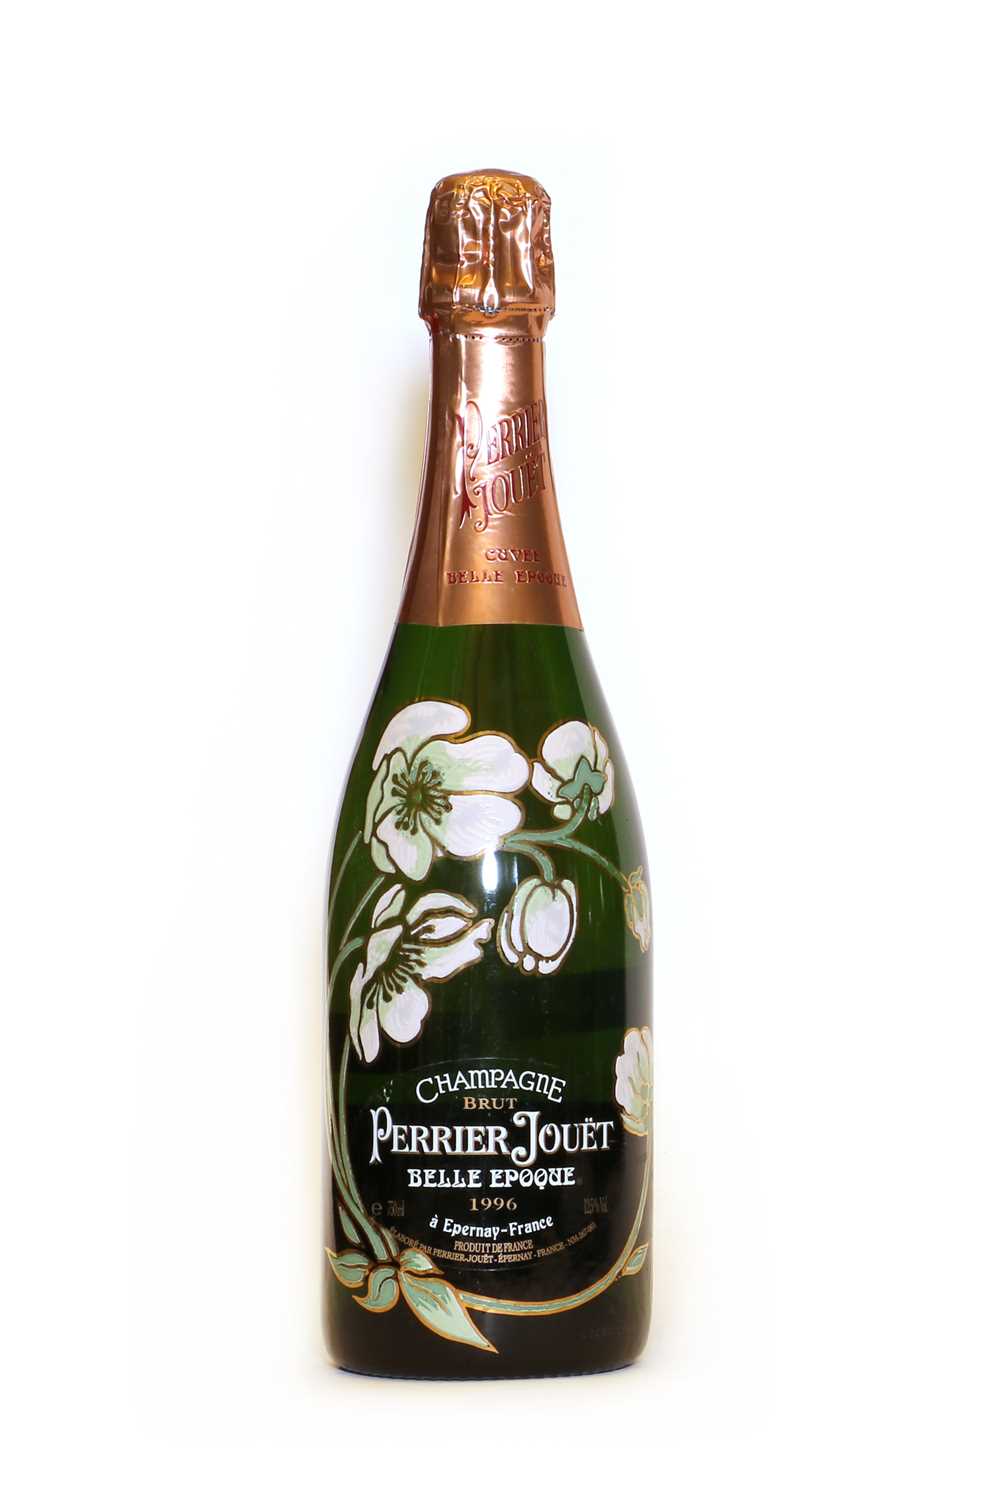 Lot 13 - Perrier-Jouët, Belle Epoque, Epernay, 1996, one bottle